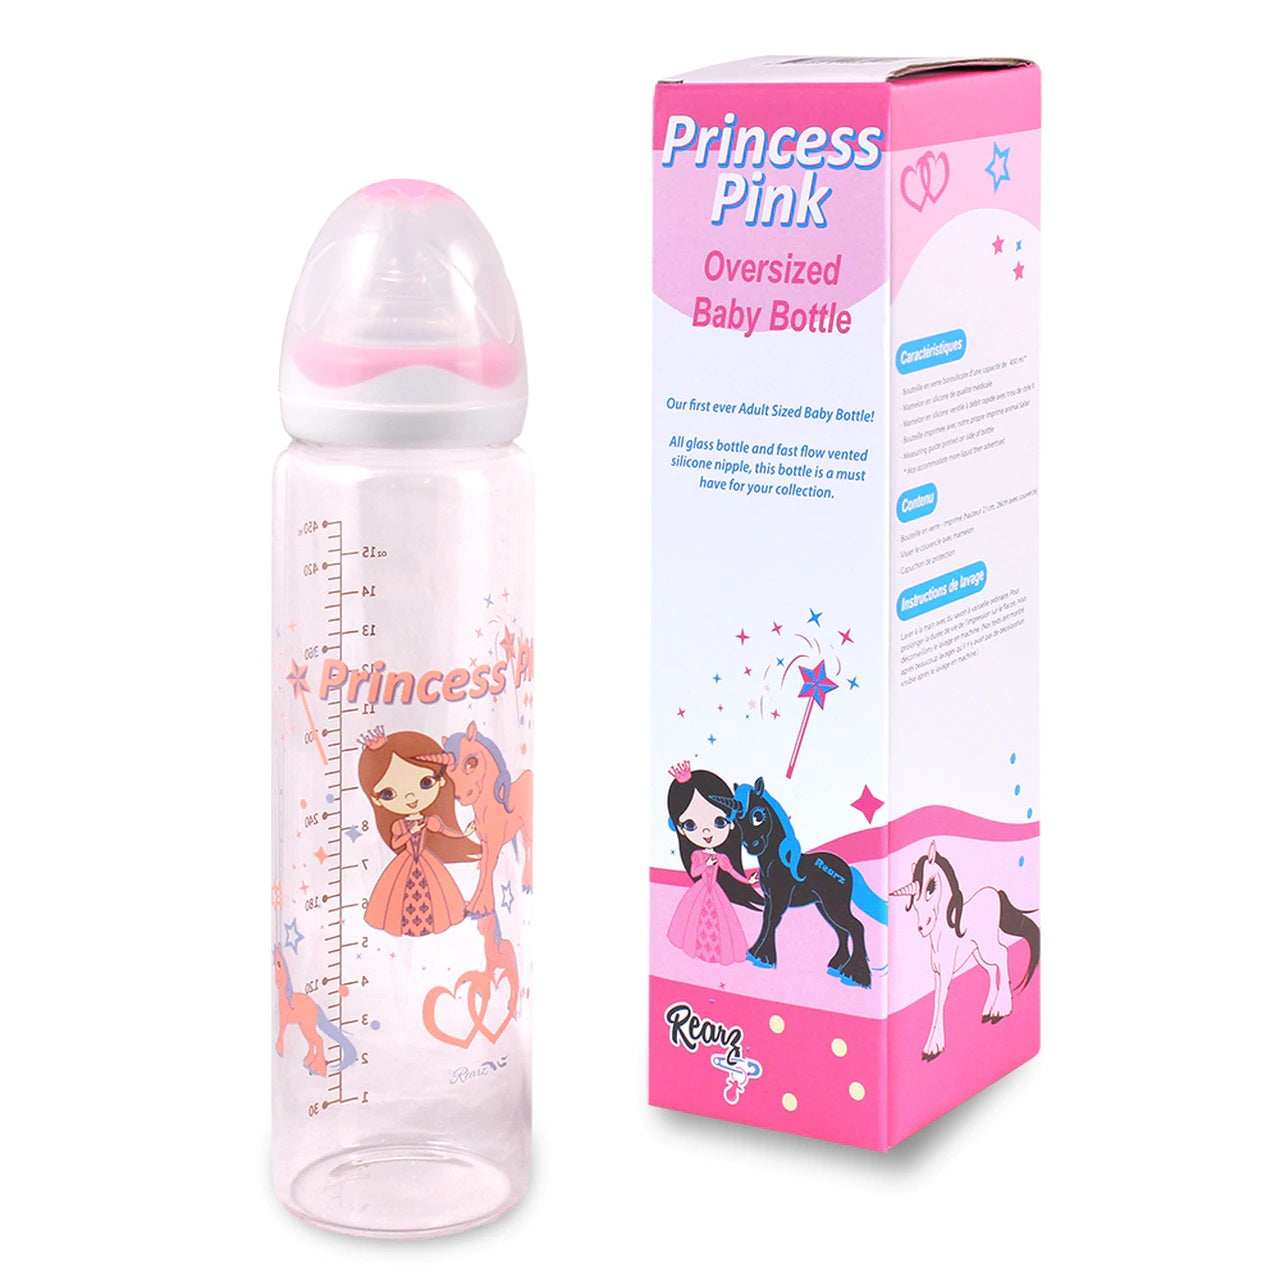 Glass Princess Pink Adult Baby Bottle sitting next to its box.